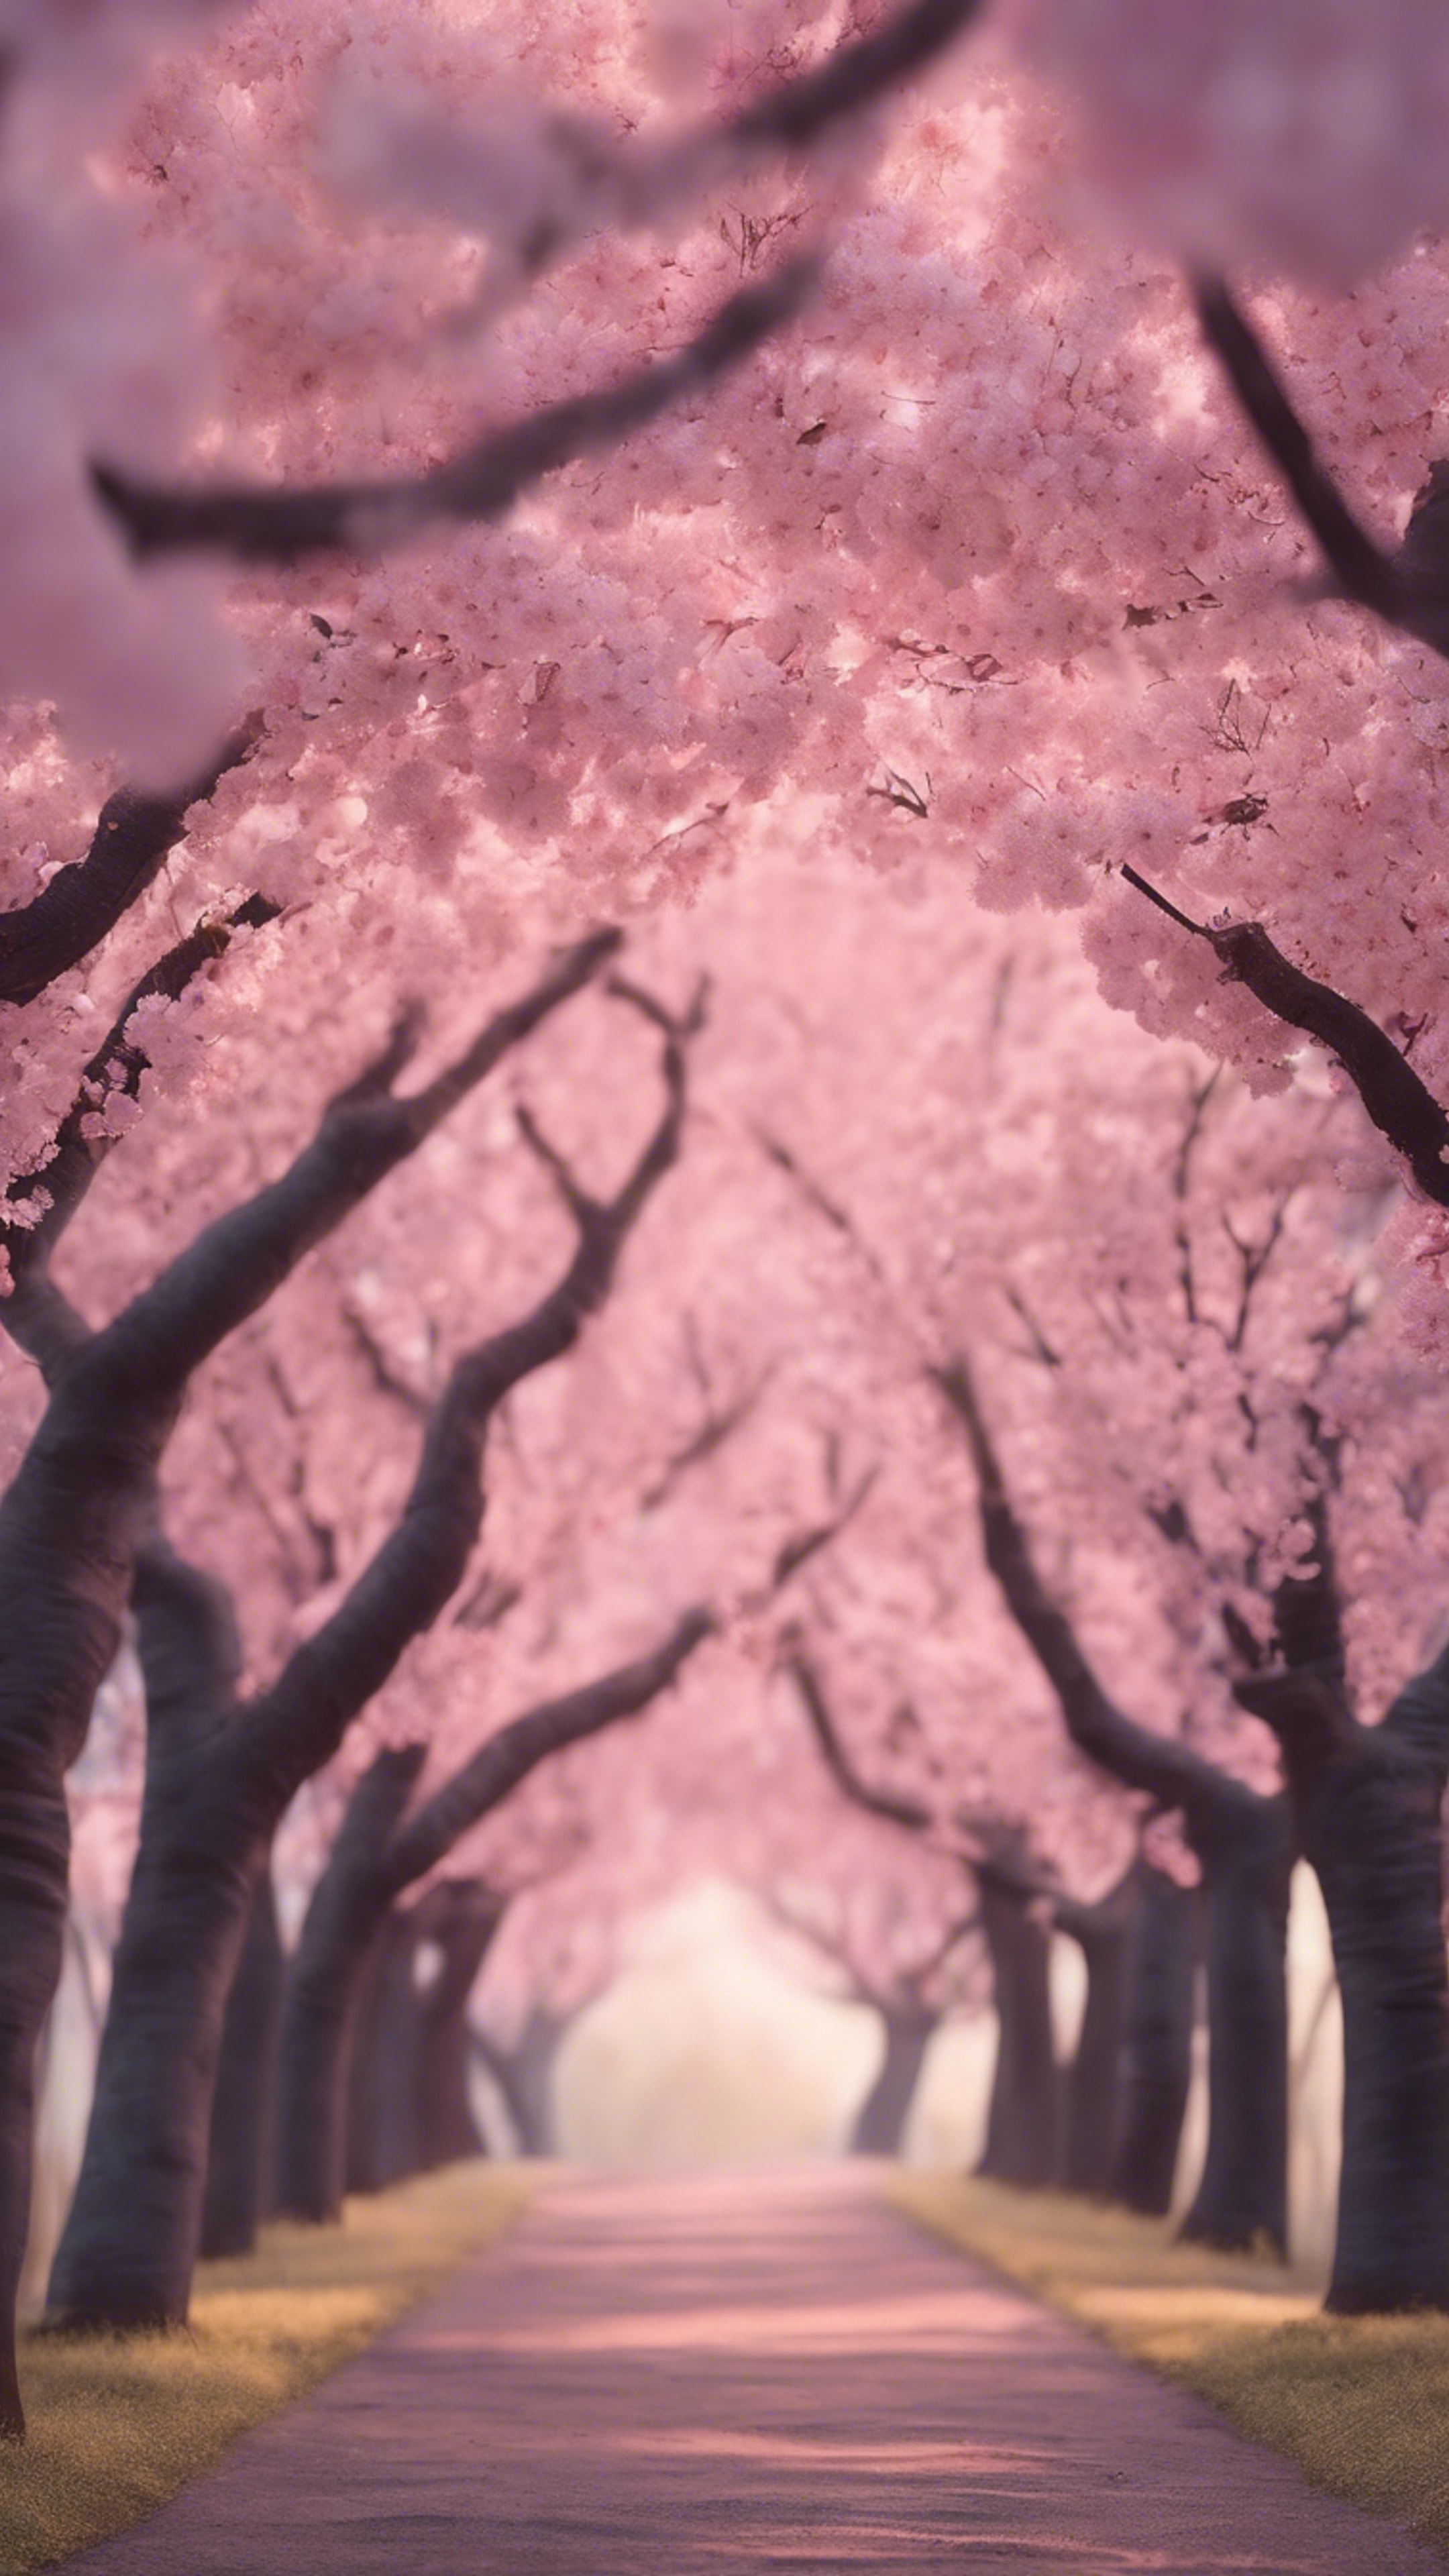 A magical dream landscape of a soft pink cherry blossom avenue under a romantic dusky sky. Tapeta[c79f6cc44b0c40cf871b]